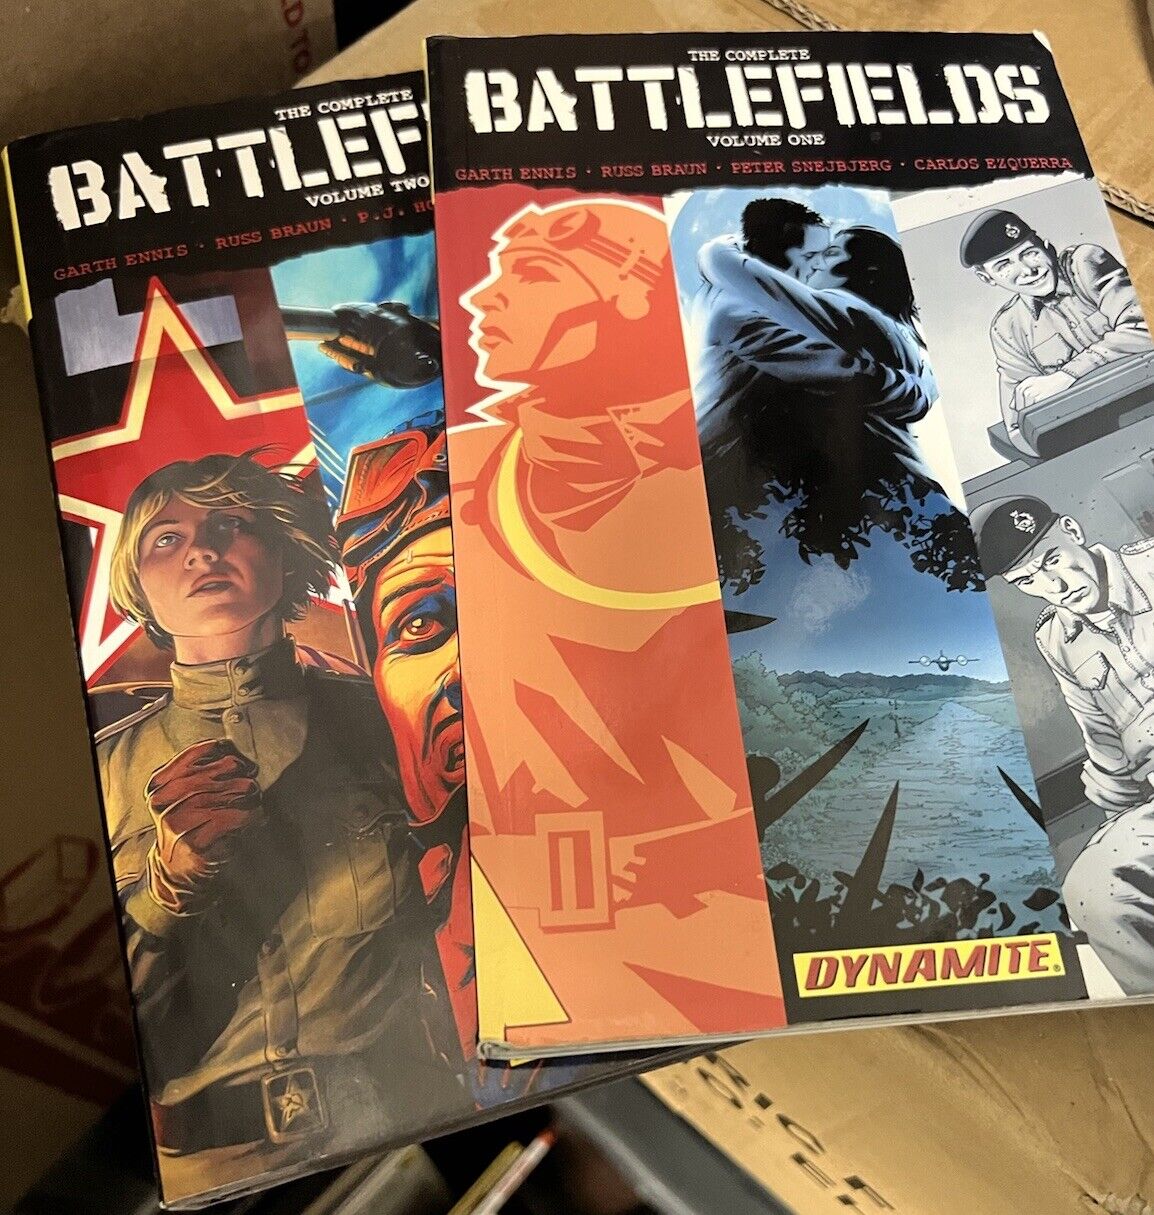 The Complete Battlefields Graphic Novel Vol. 1 & 2 - Dynamite Comic Soft & Hard